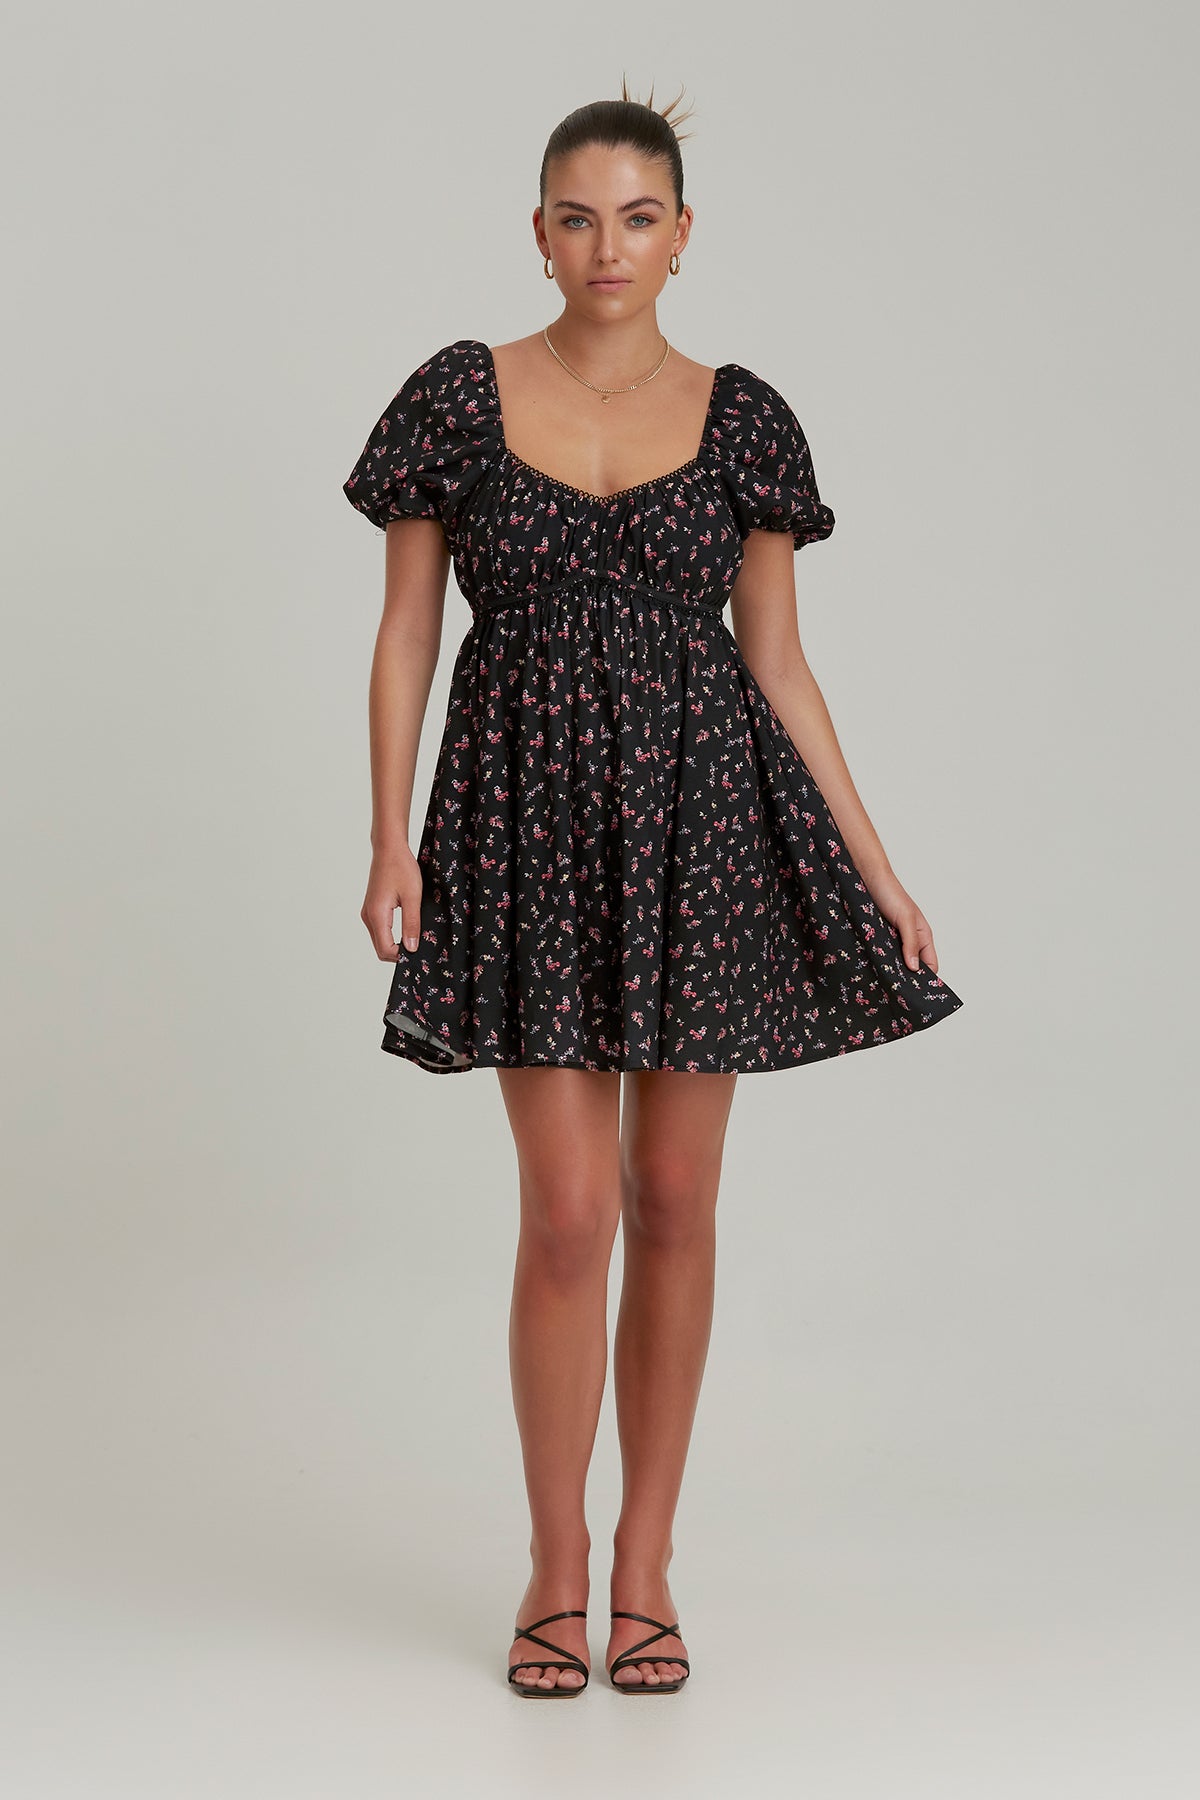 Finders - Zadie Mini Dress - Black Daisy